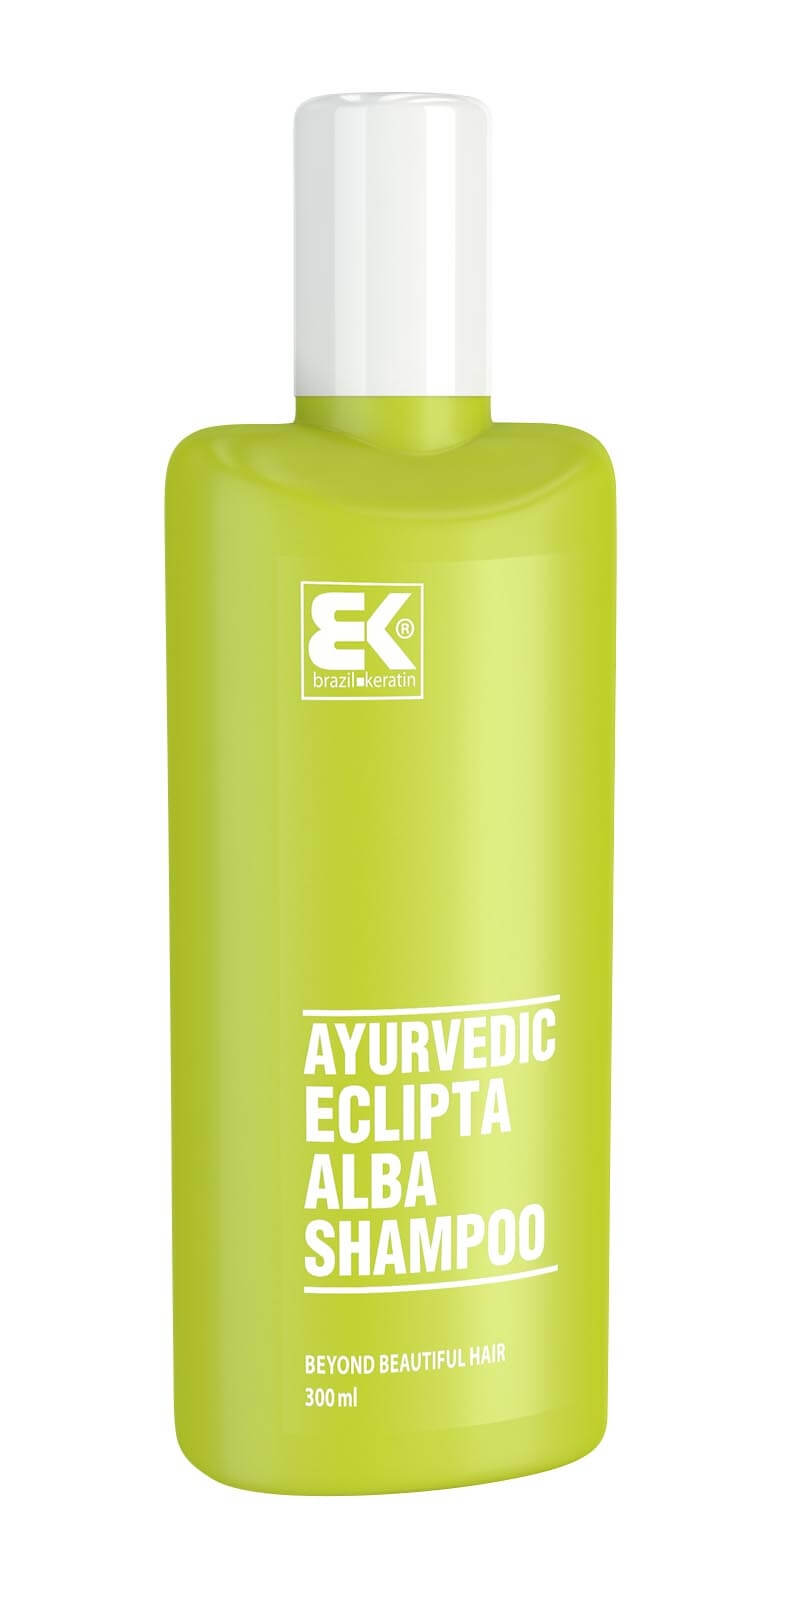 Zobrazit detail výrobku Brazil Keratin Šampon s ajurvédskou bylinou (Ayurvedic Eclipta Alba Shampoo) 300 ml